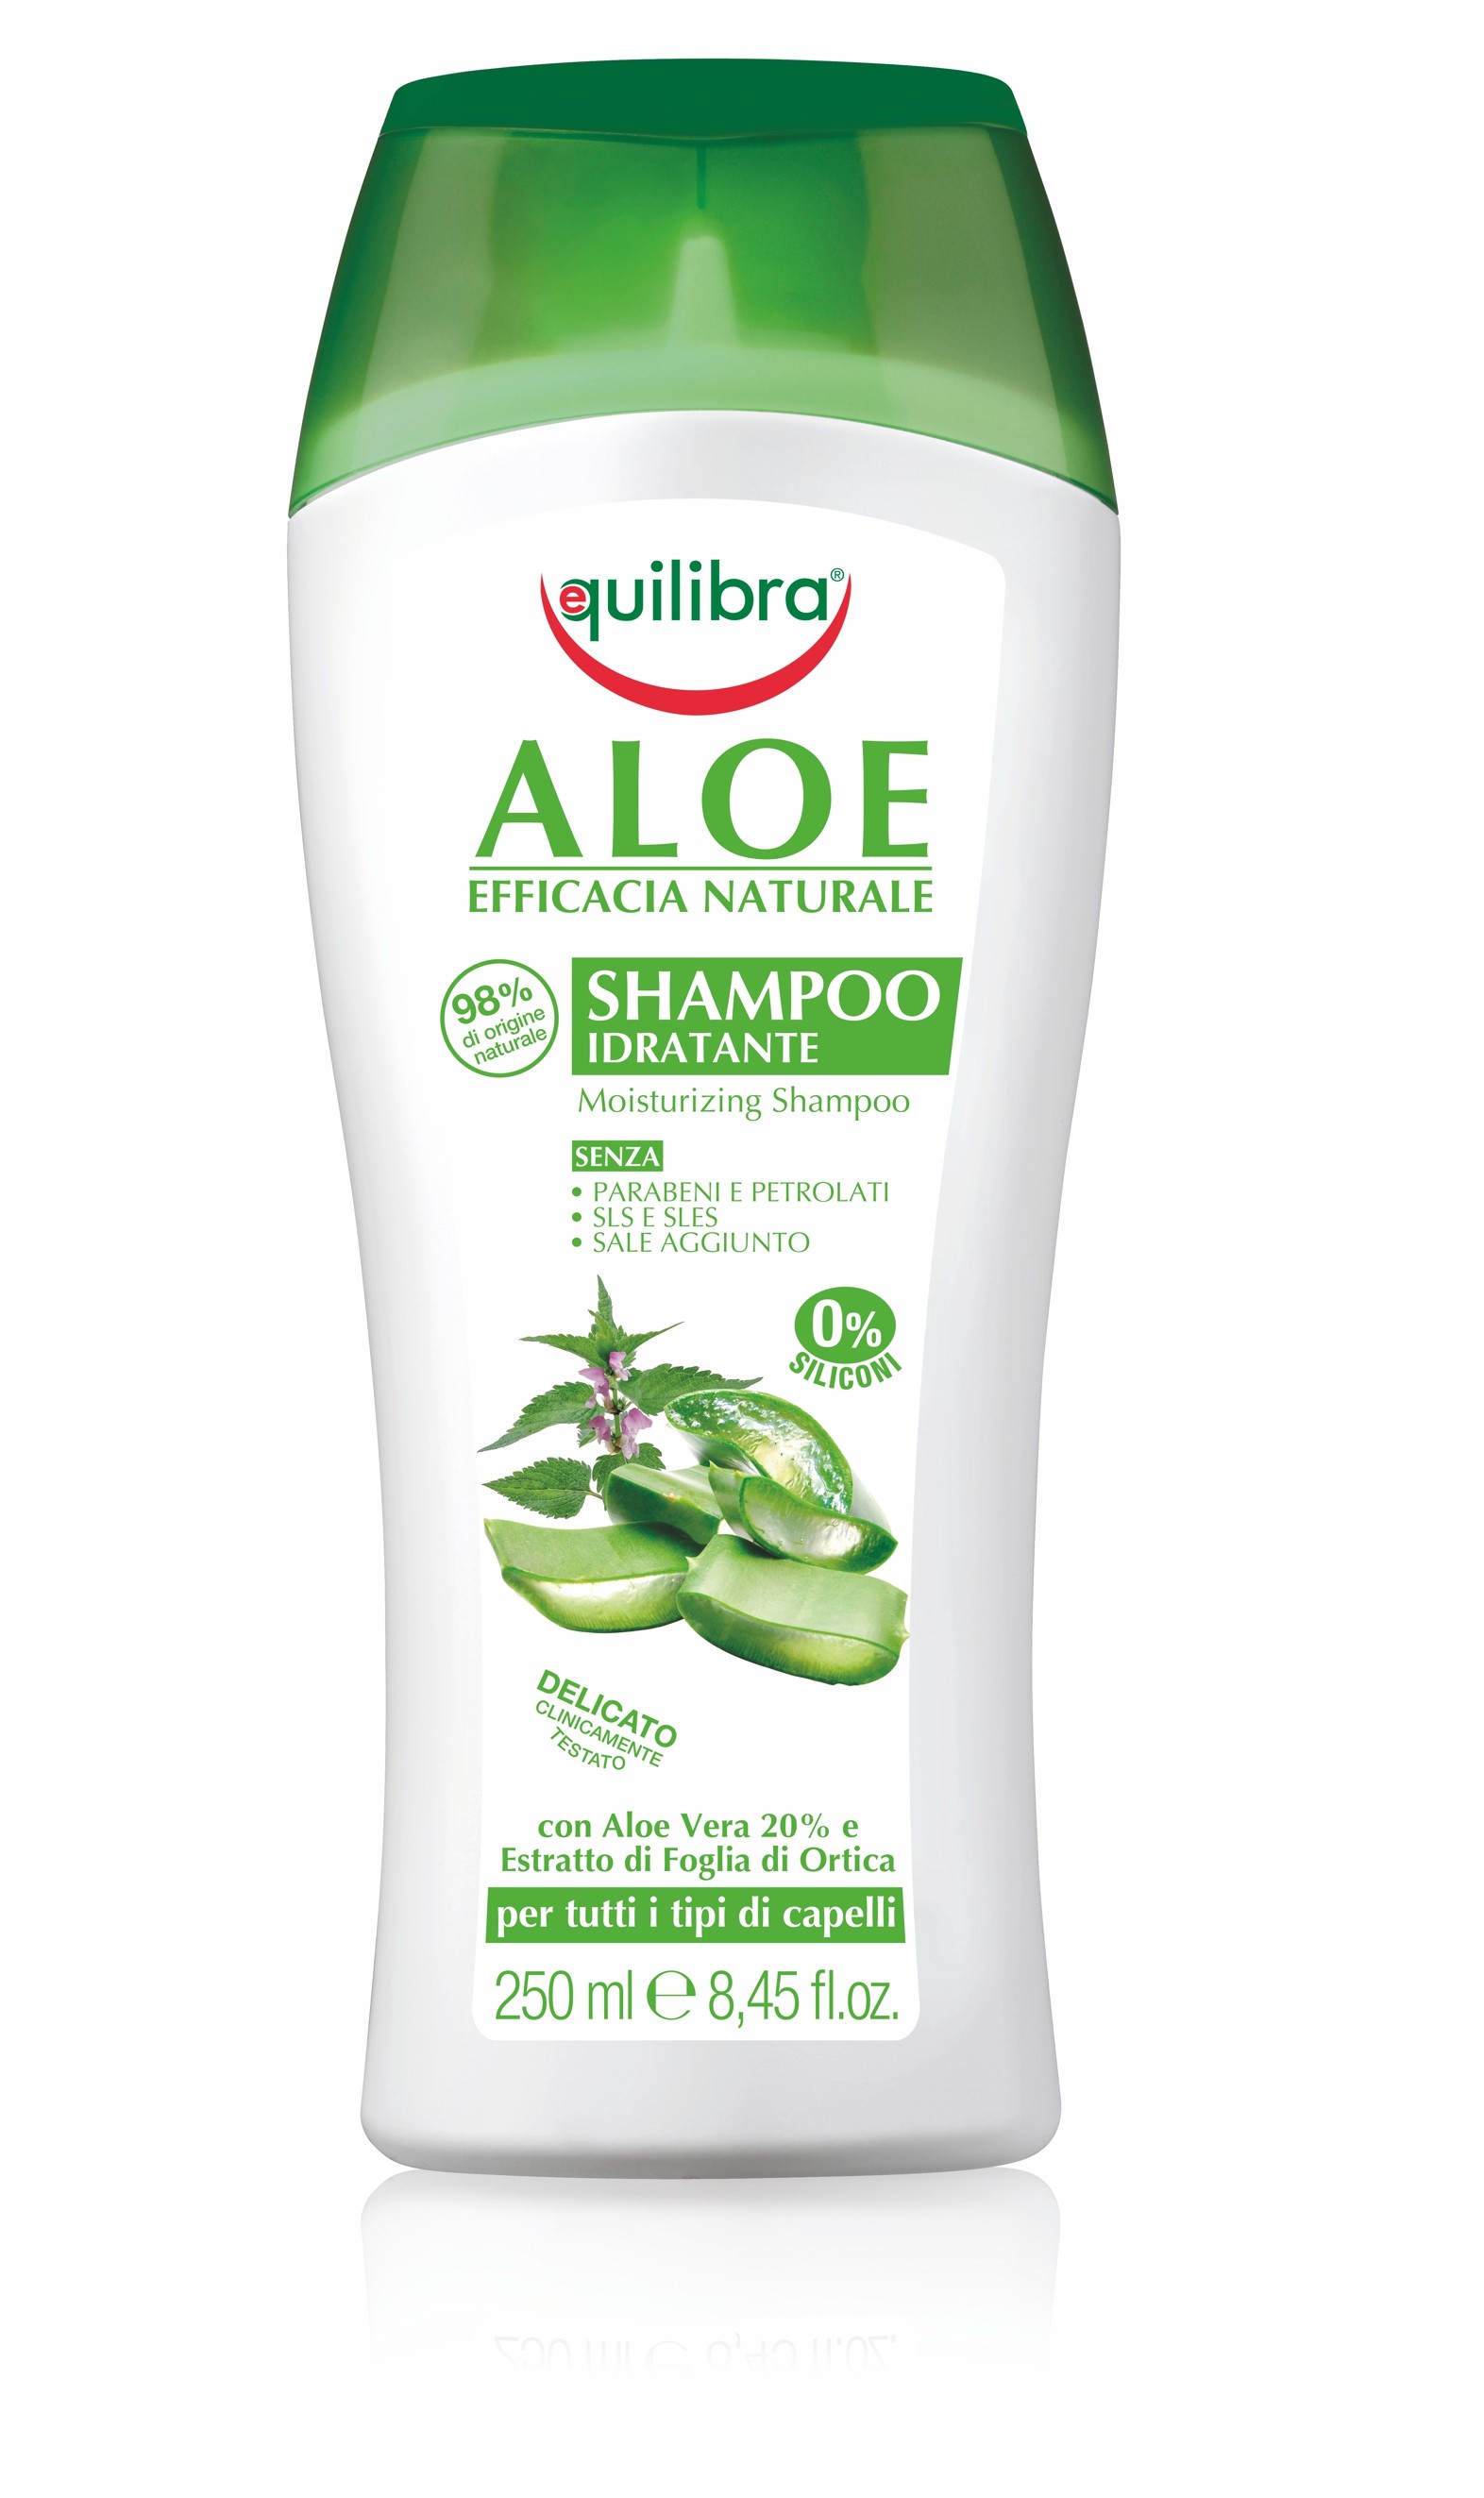 equilibra szampon aloesowy